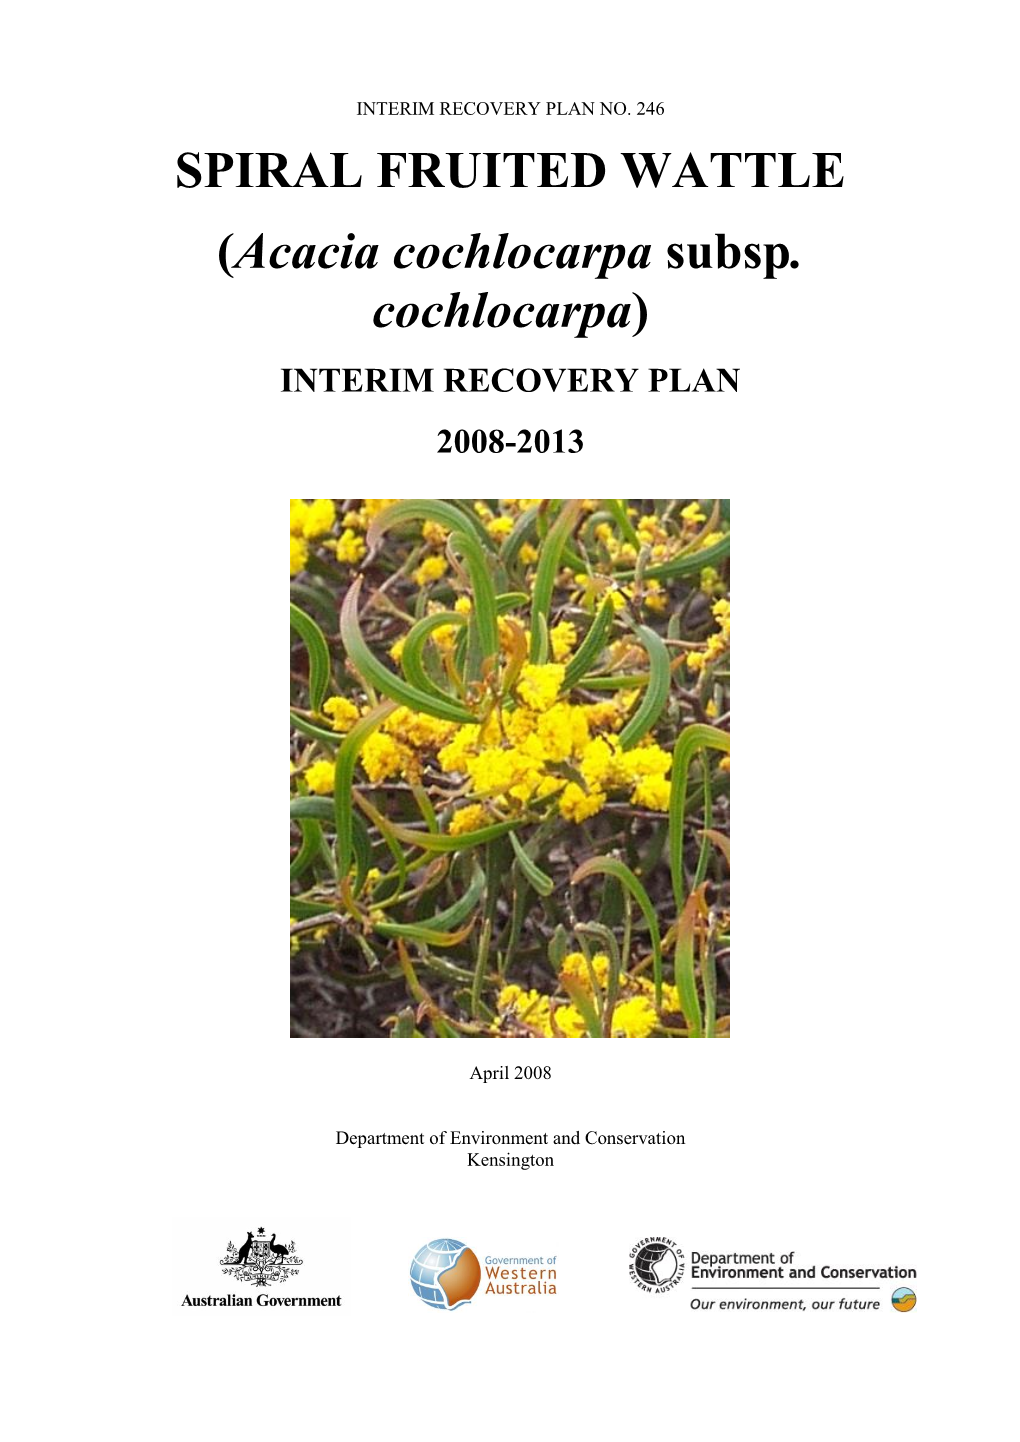 Acacia Cochlocarpa Subsp.Cochlocarpa443.08 KB